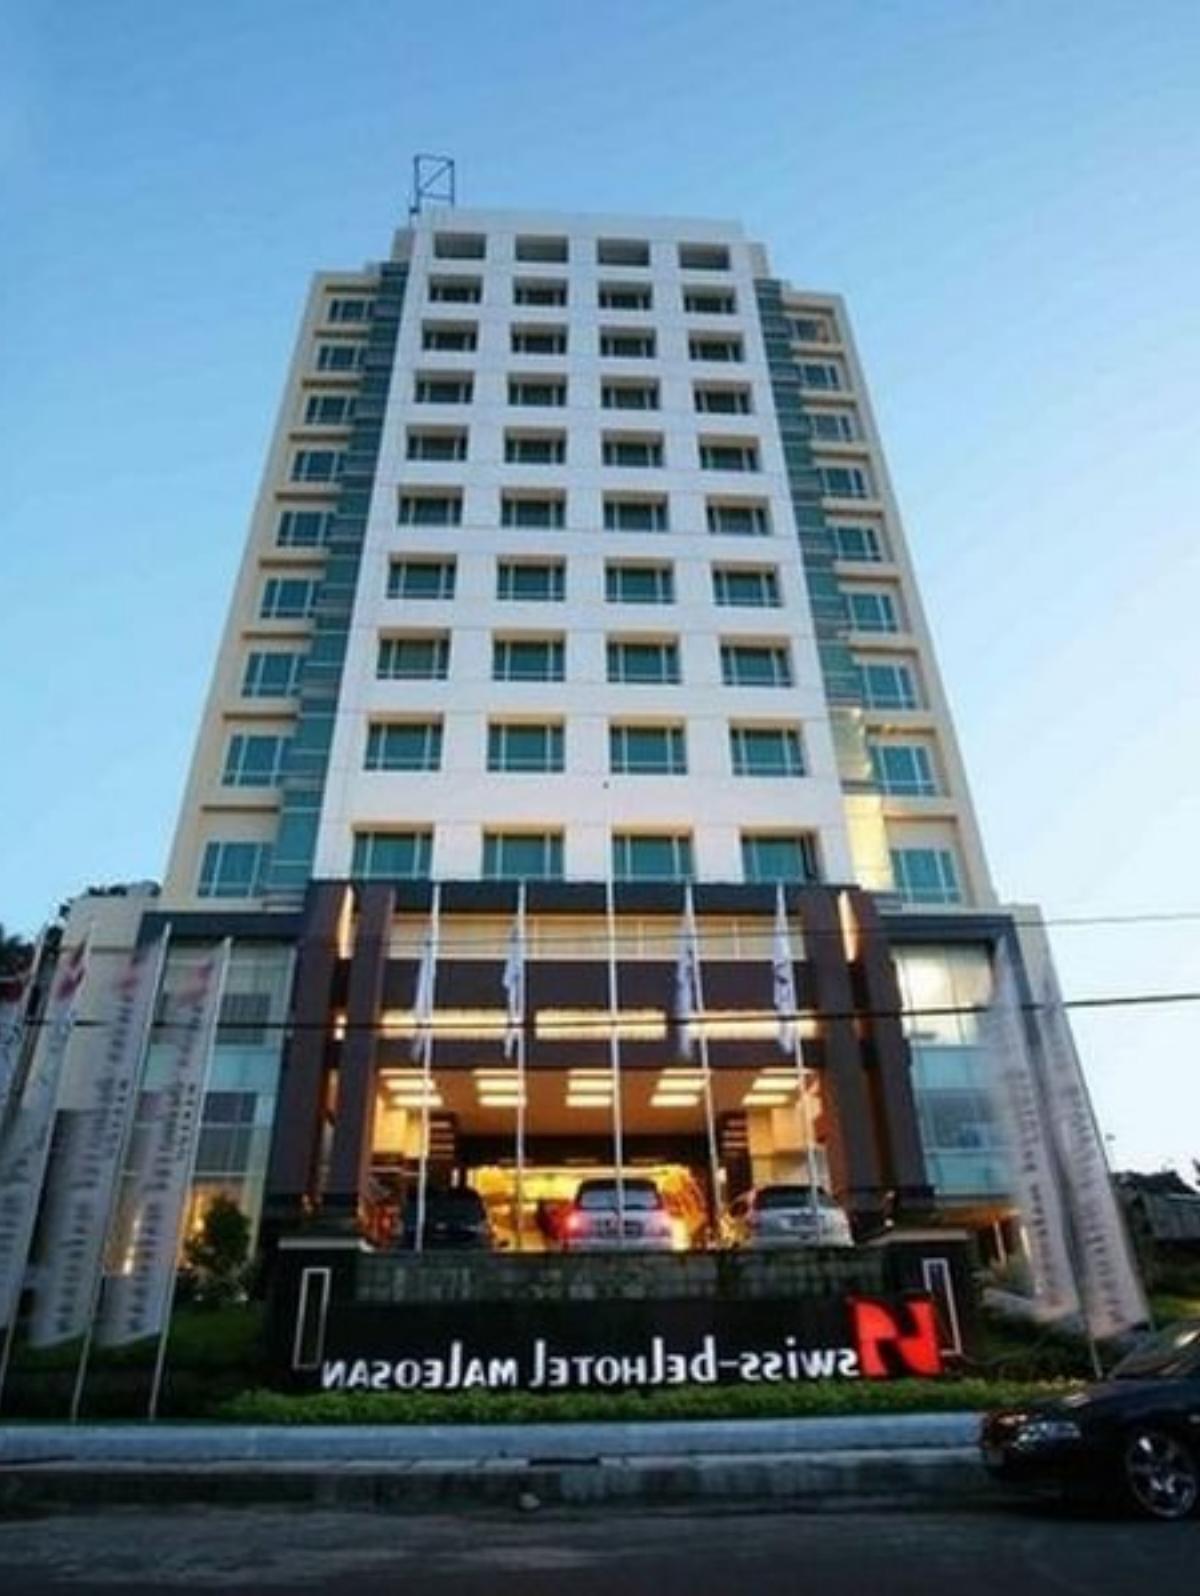 Swiss-Belhotel Maleosan Manado Hotel Manado Indonesia